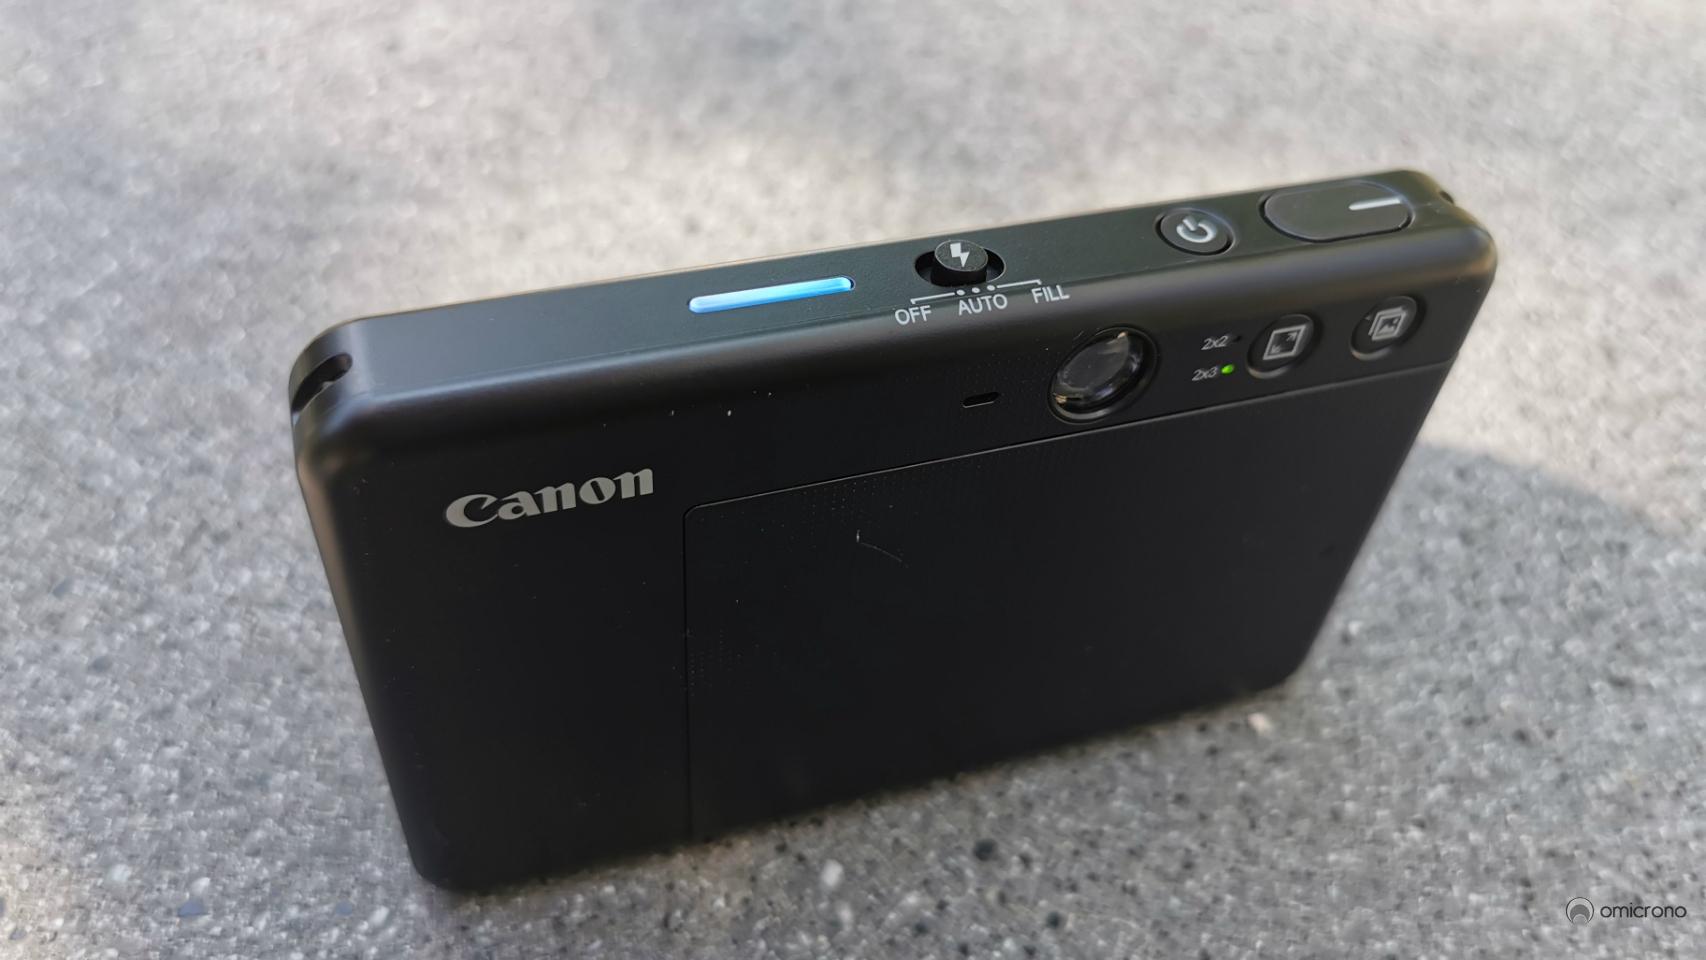 Análisis de la Canon Zoemini S: la cámara-impresora para viajeros